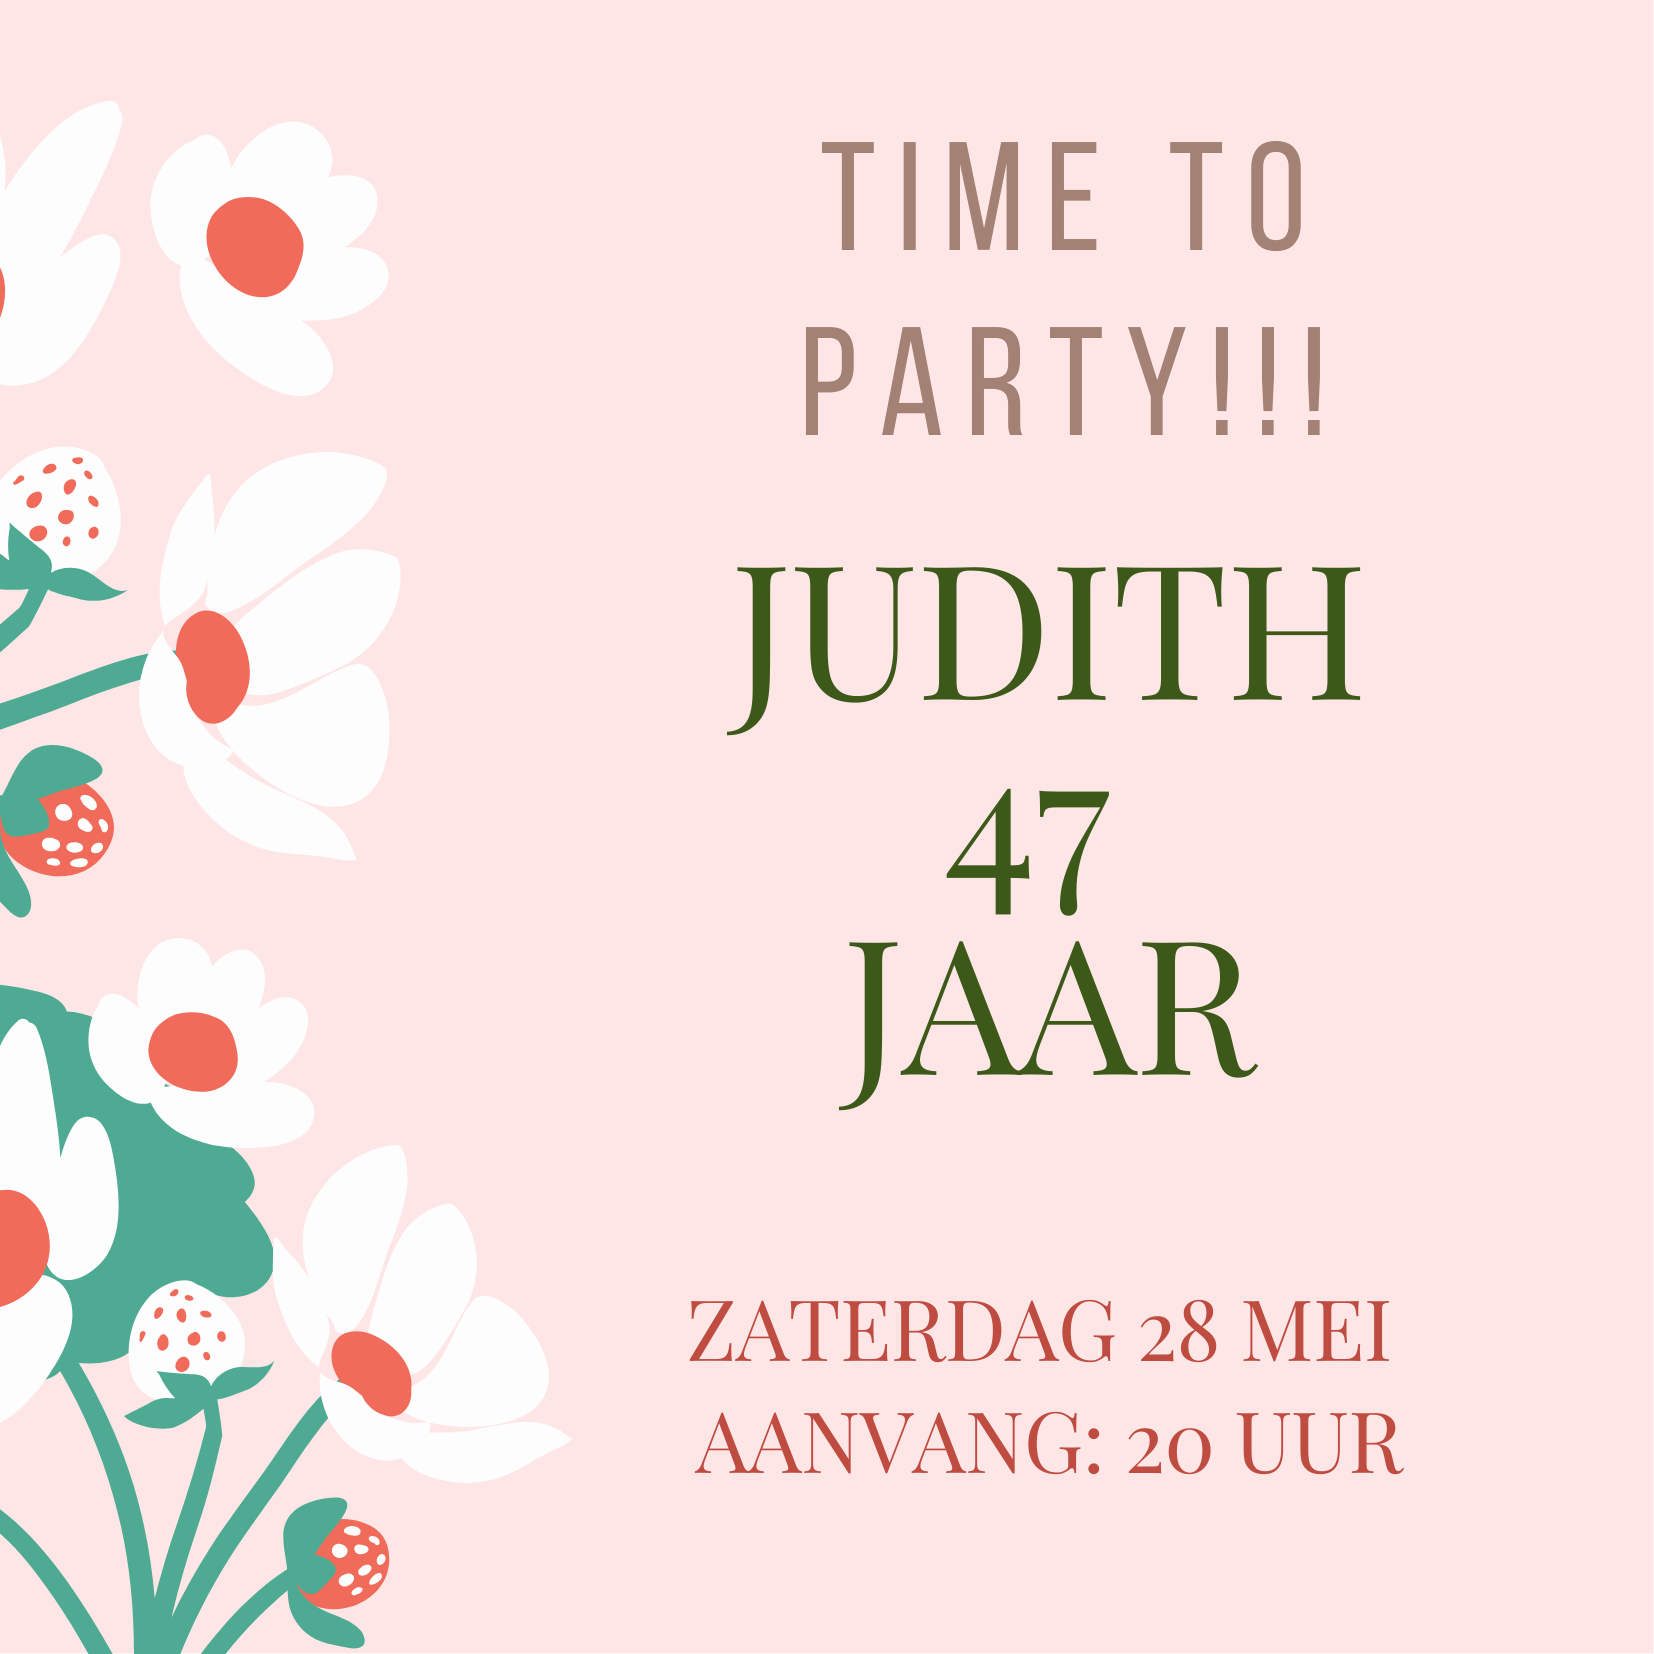 Digitale verjaardagsuitnodiging met roze achtergrond en tekst